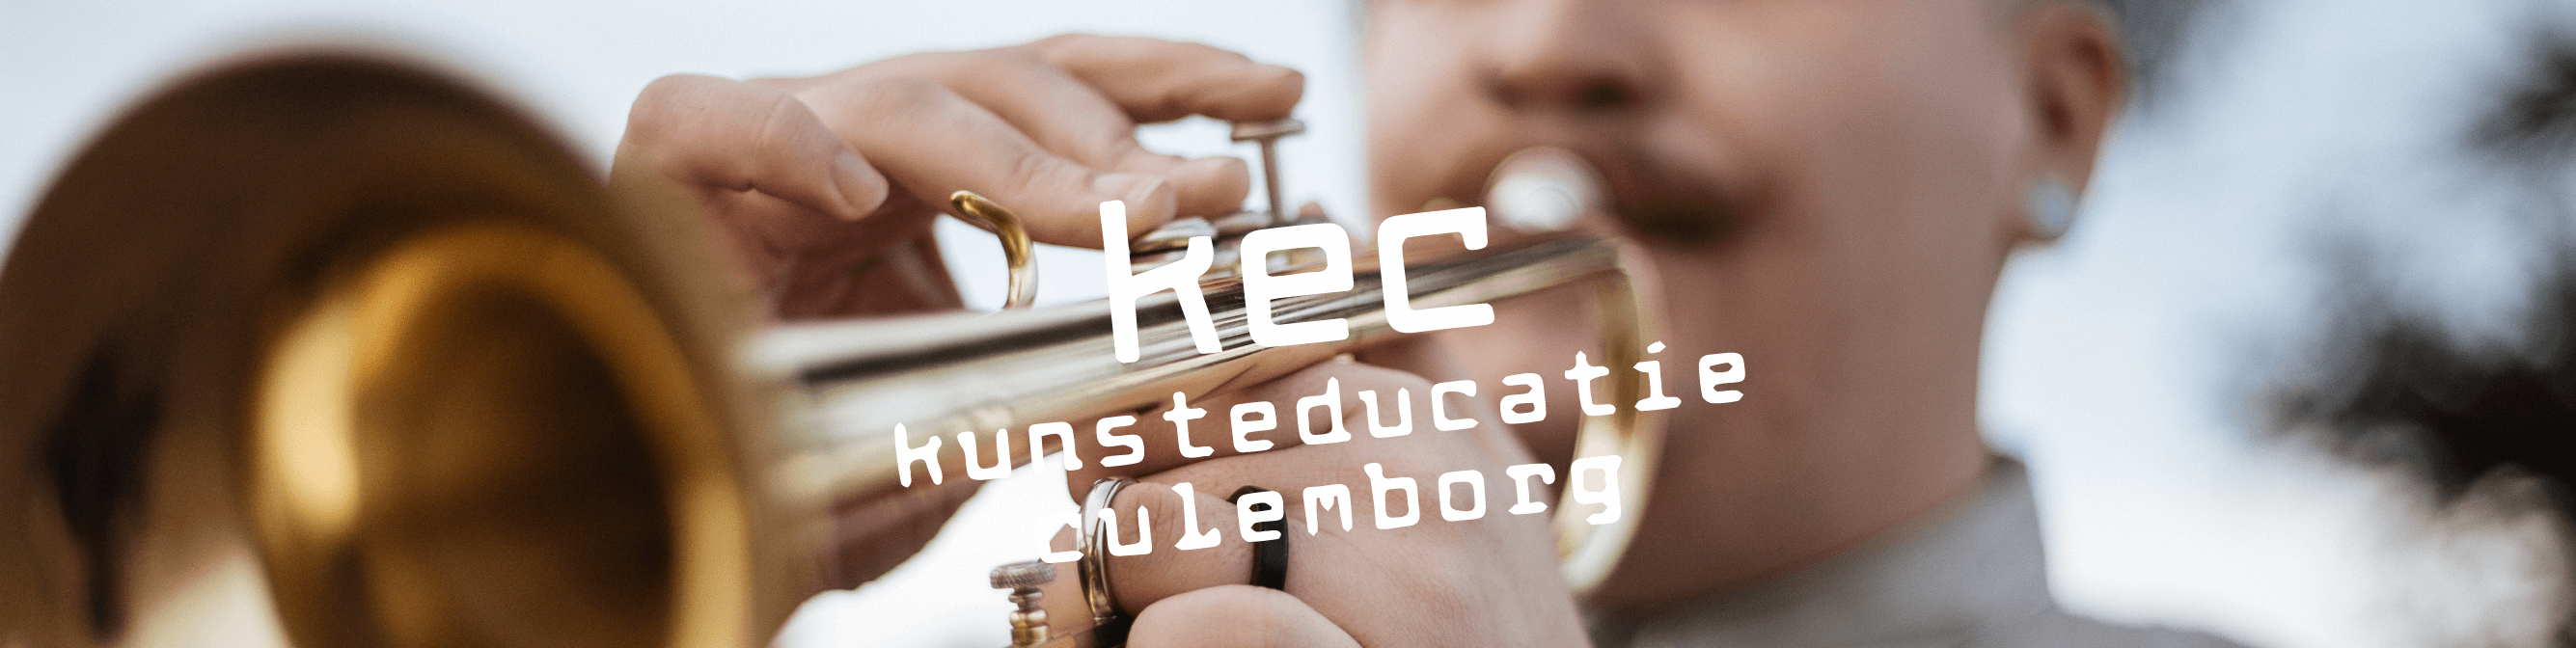 Banner KEC Kunsteducatie Culemborg